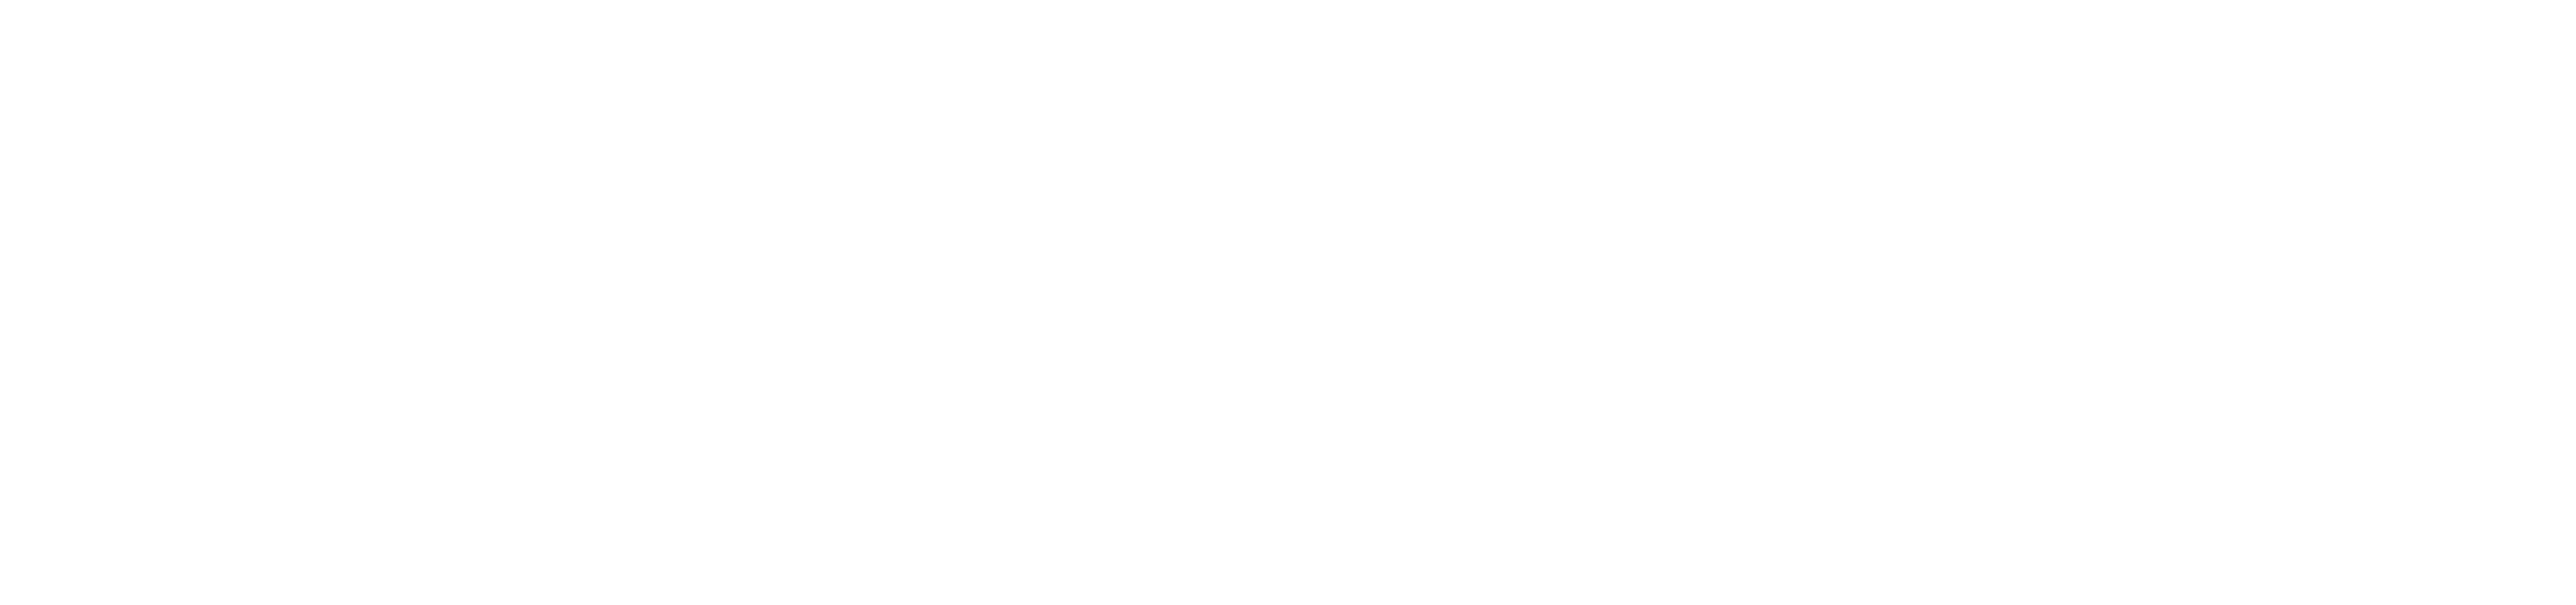 Indiana Farmers Union